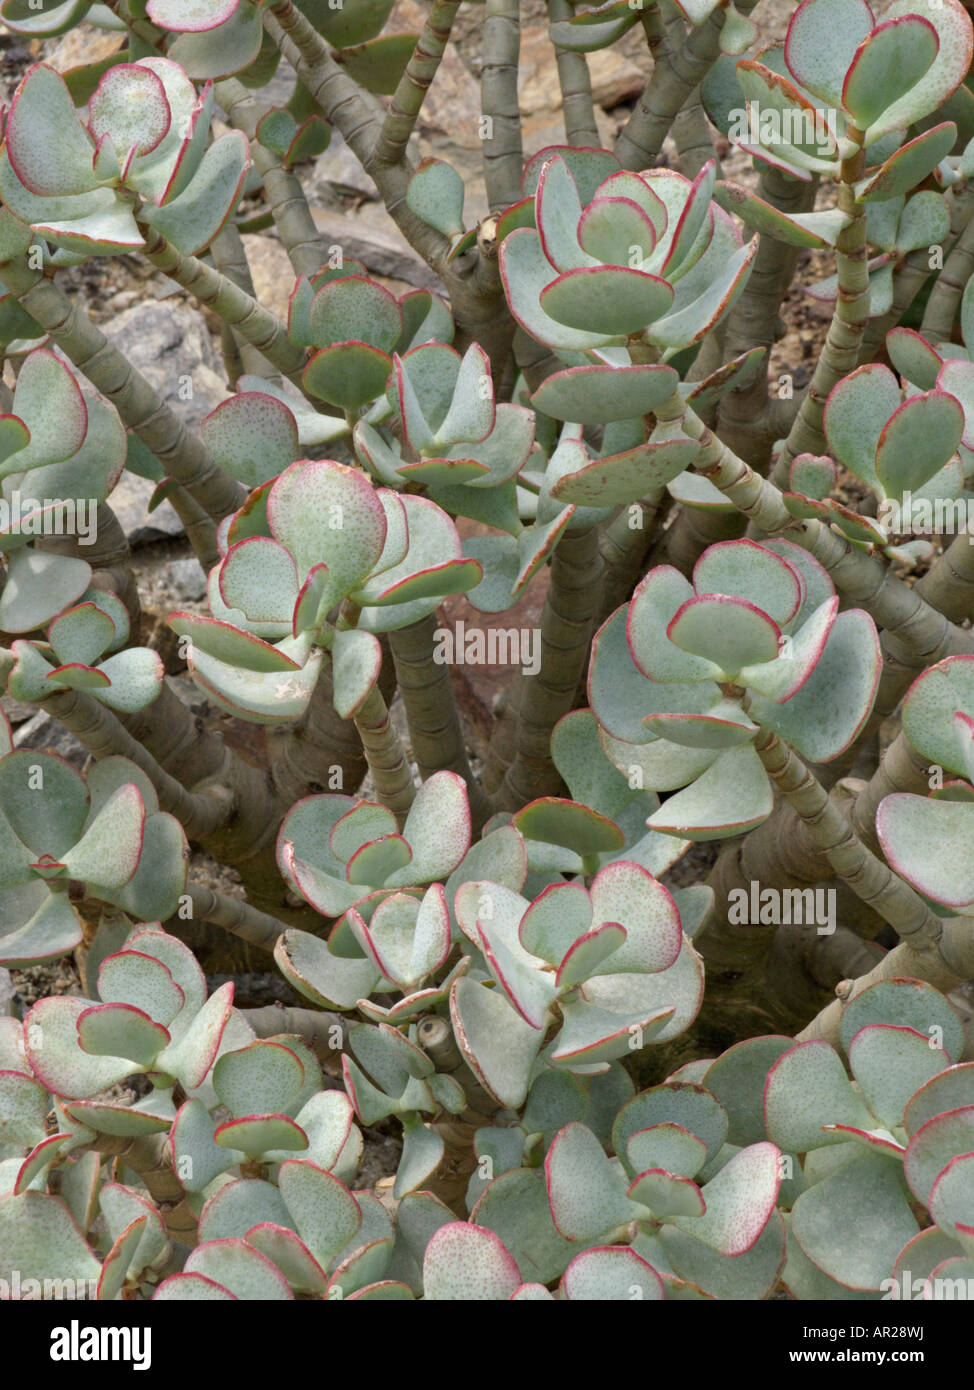 Silver dollar plant (Crassula arborescens) Stock Photo